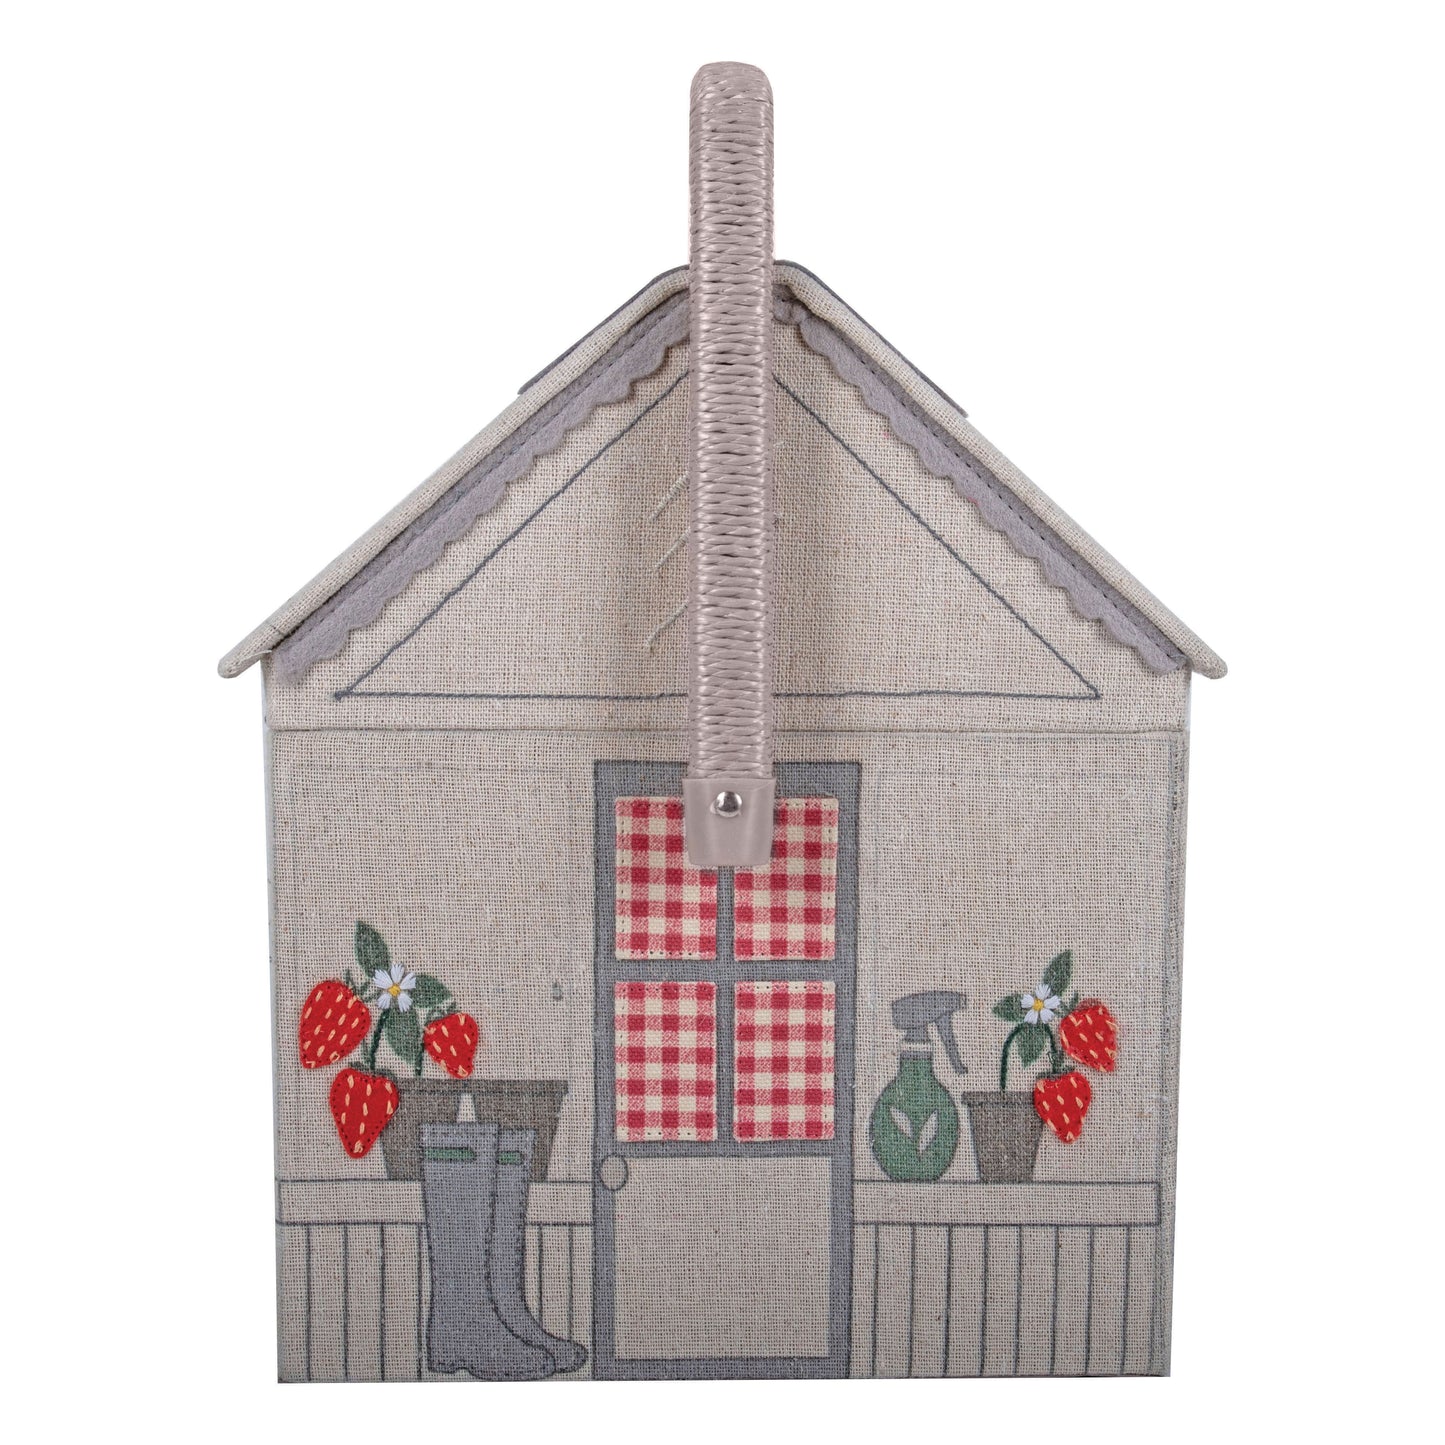 Sewing Box Novelty Strawberry Greenhouse